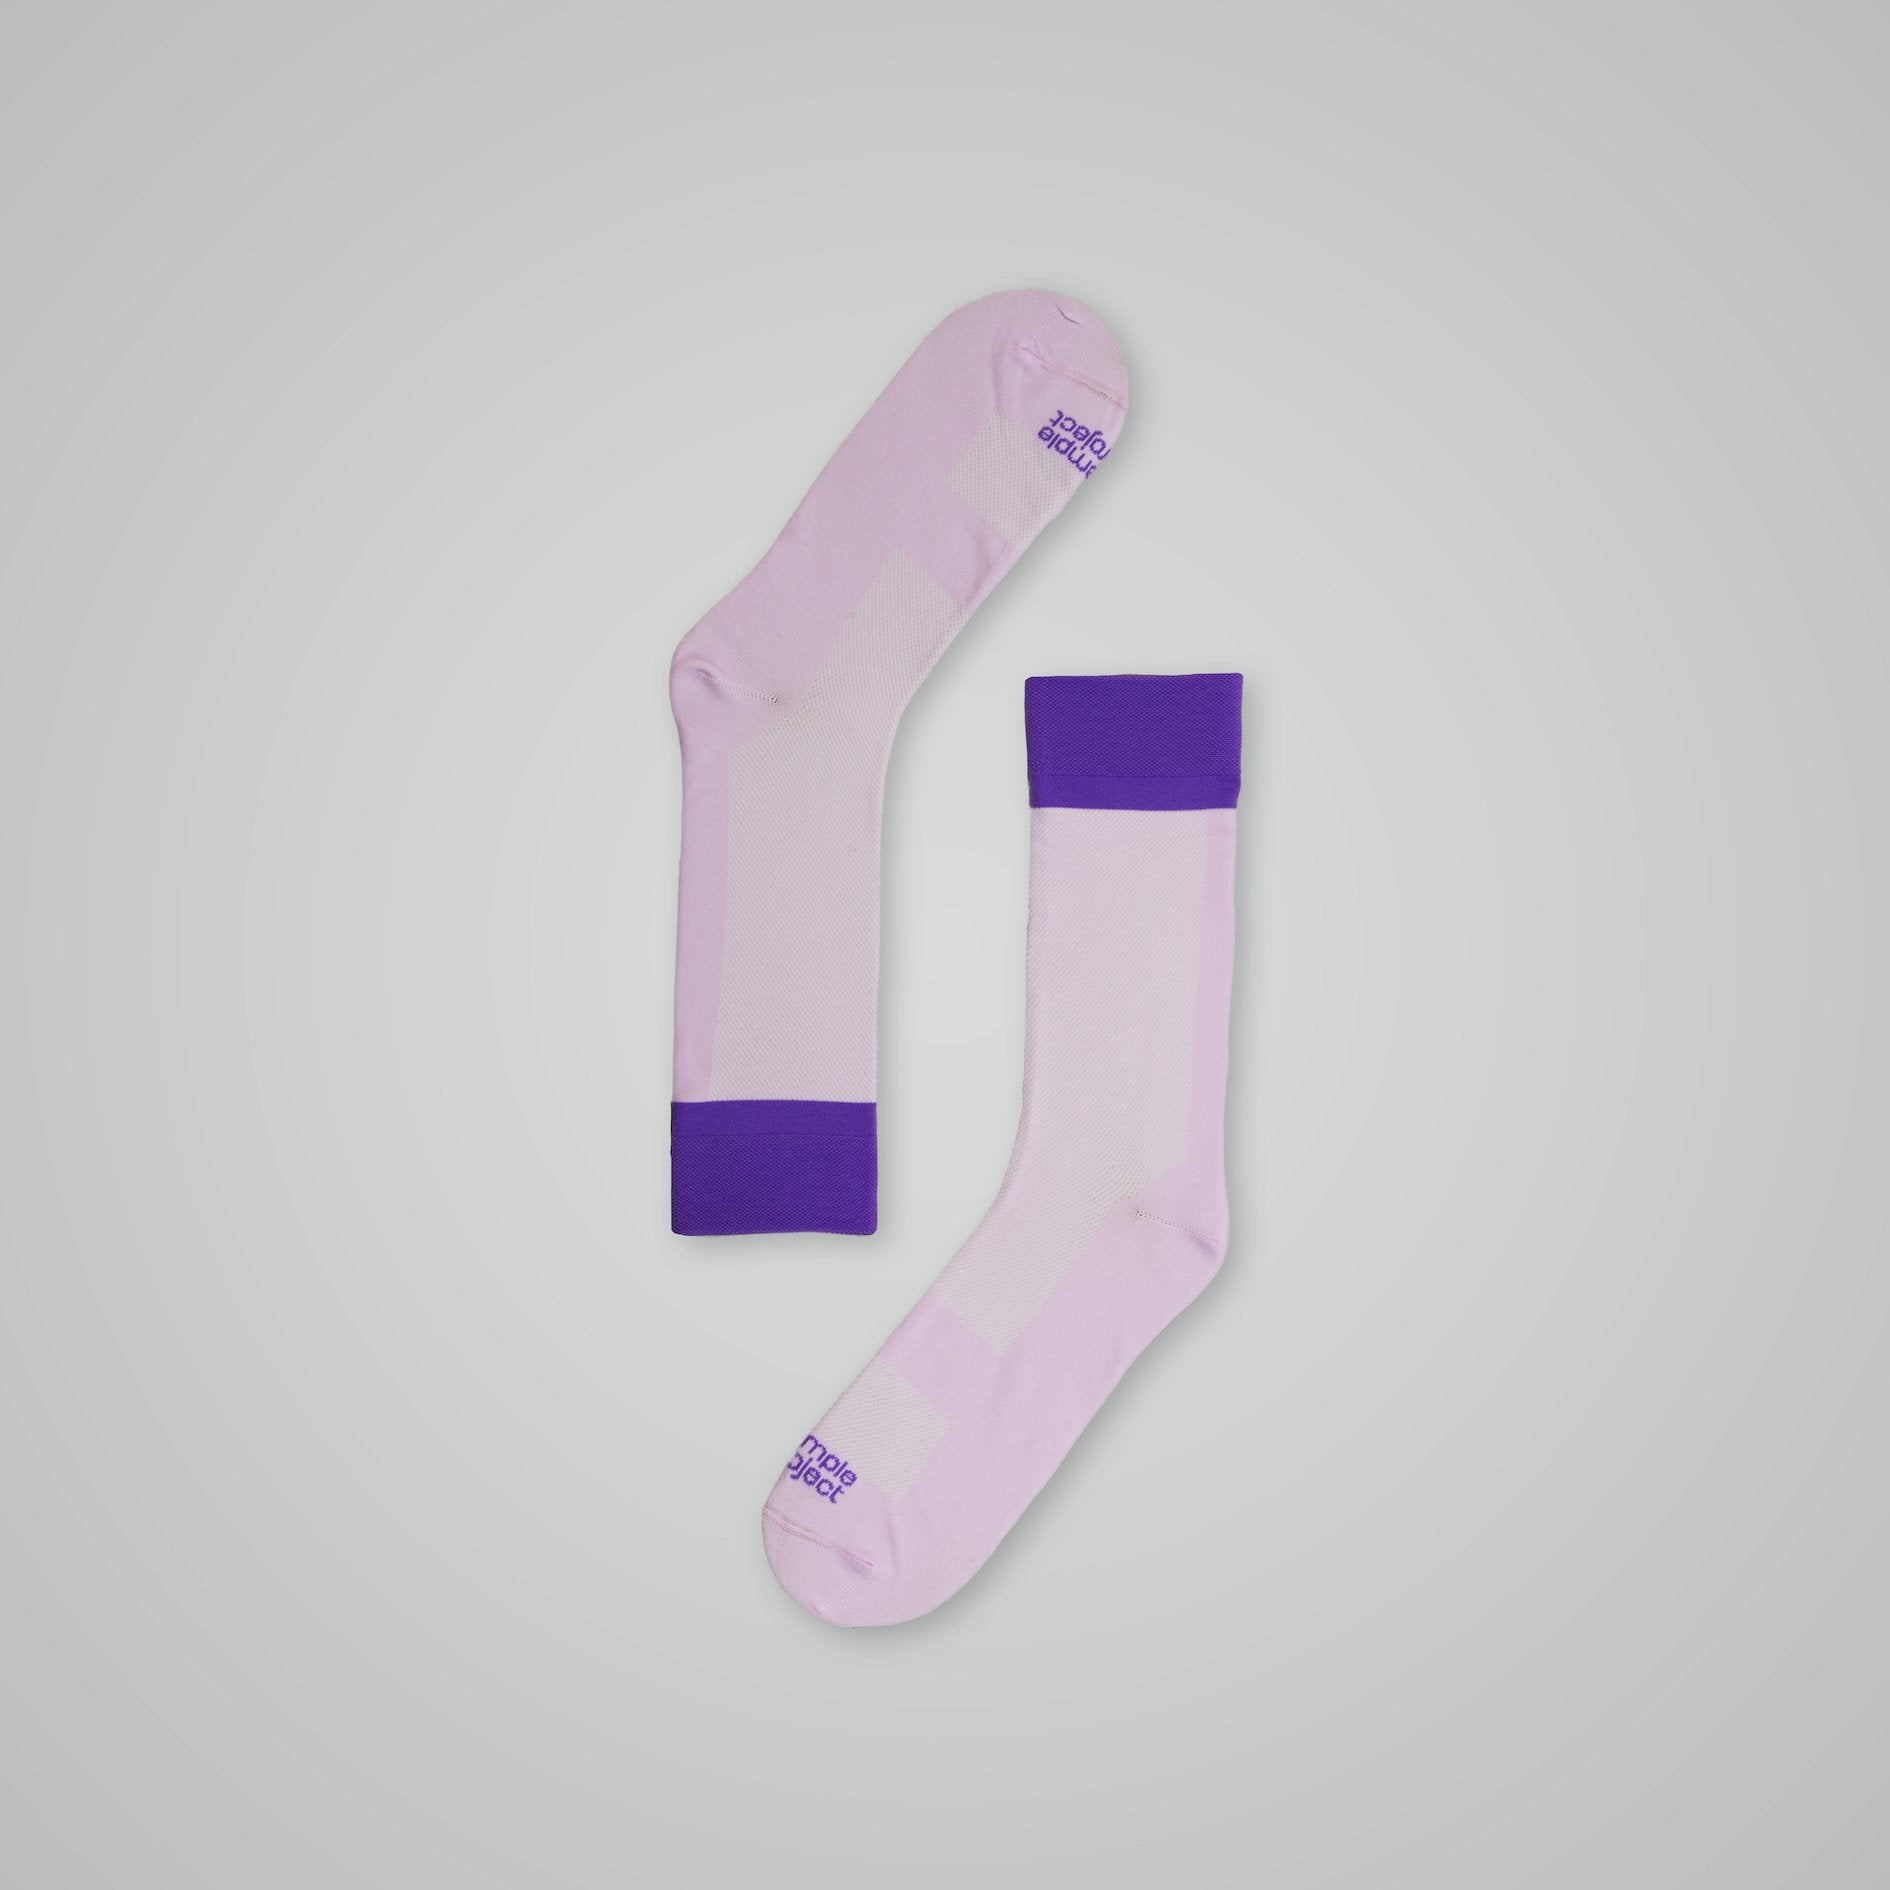 TwoTone Socks - Purple and white